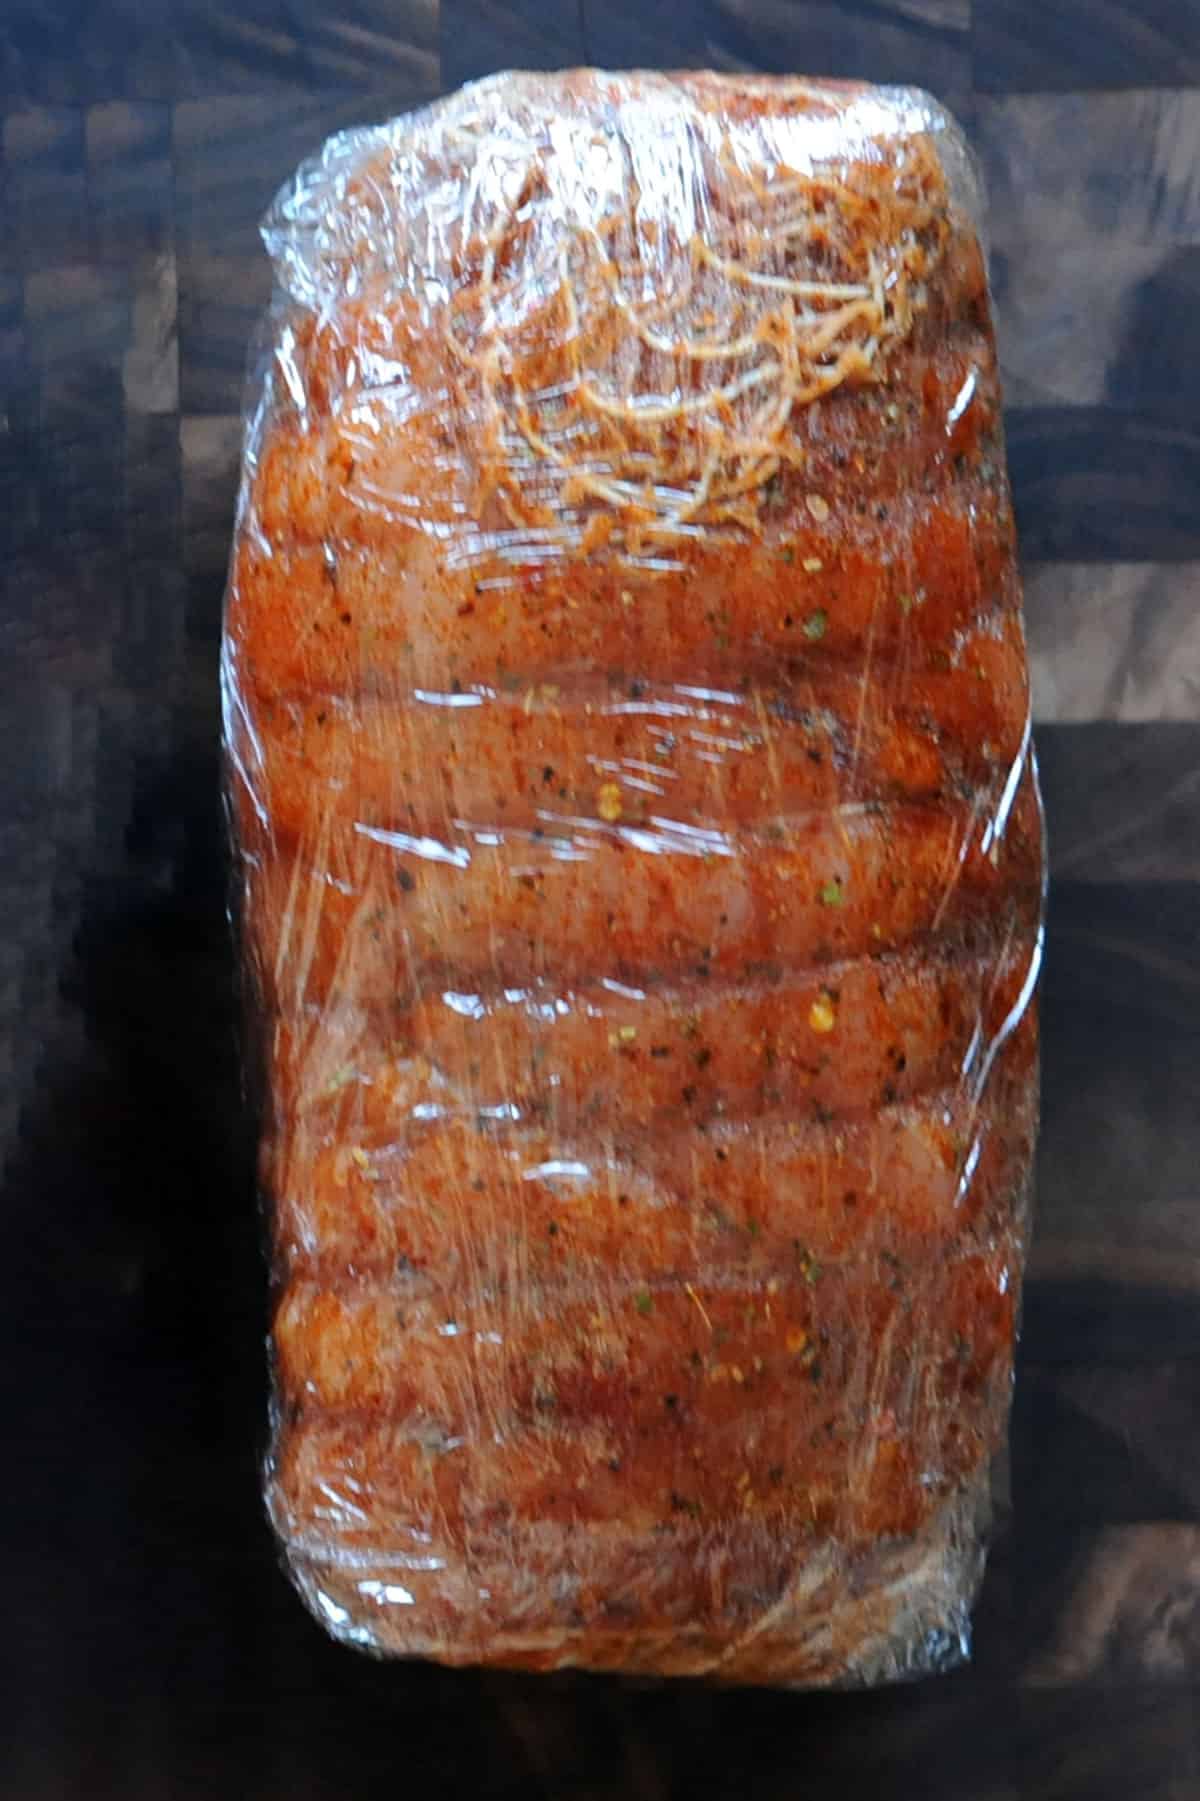 Turkey roast seasoned and wrapped in plastic.